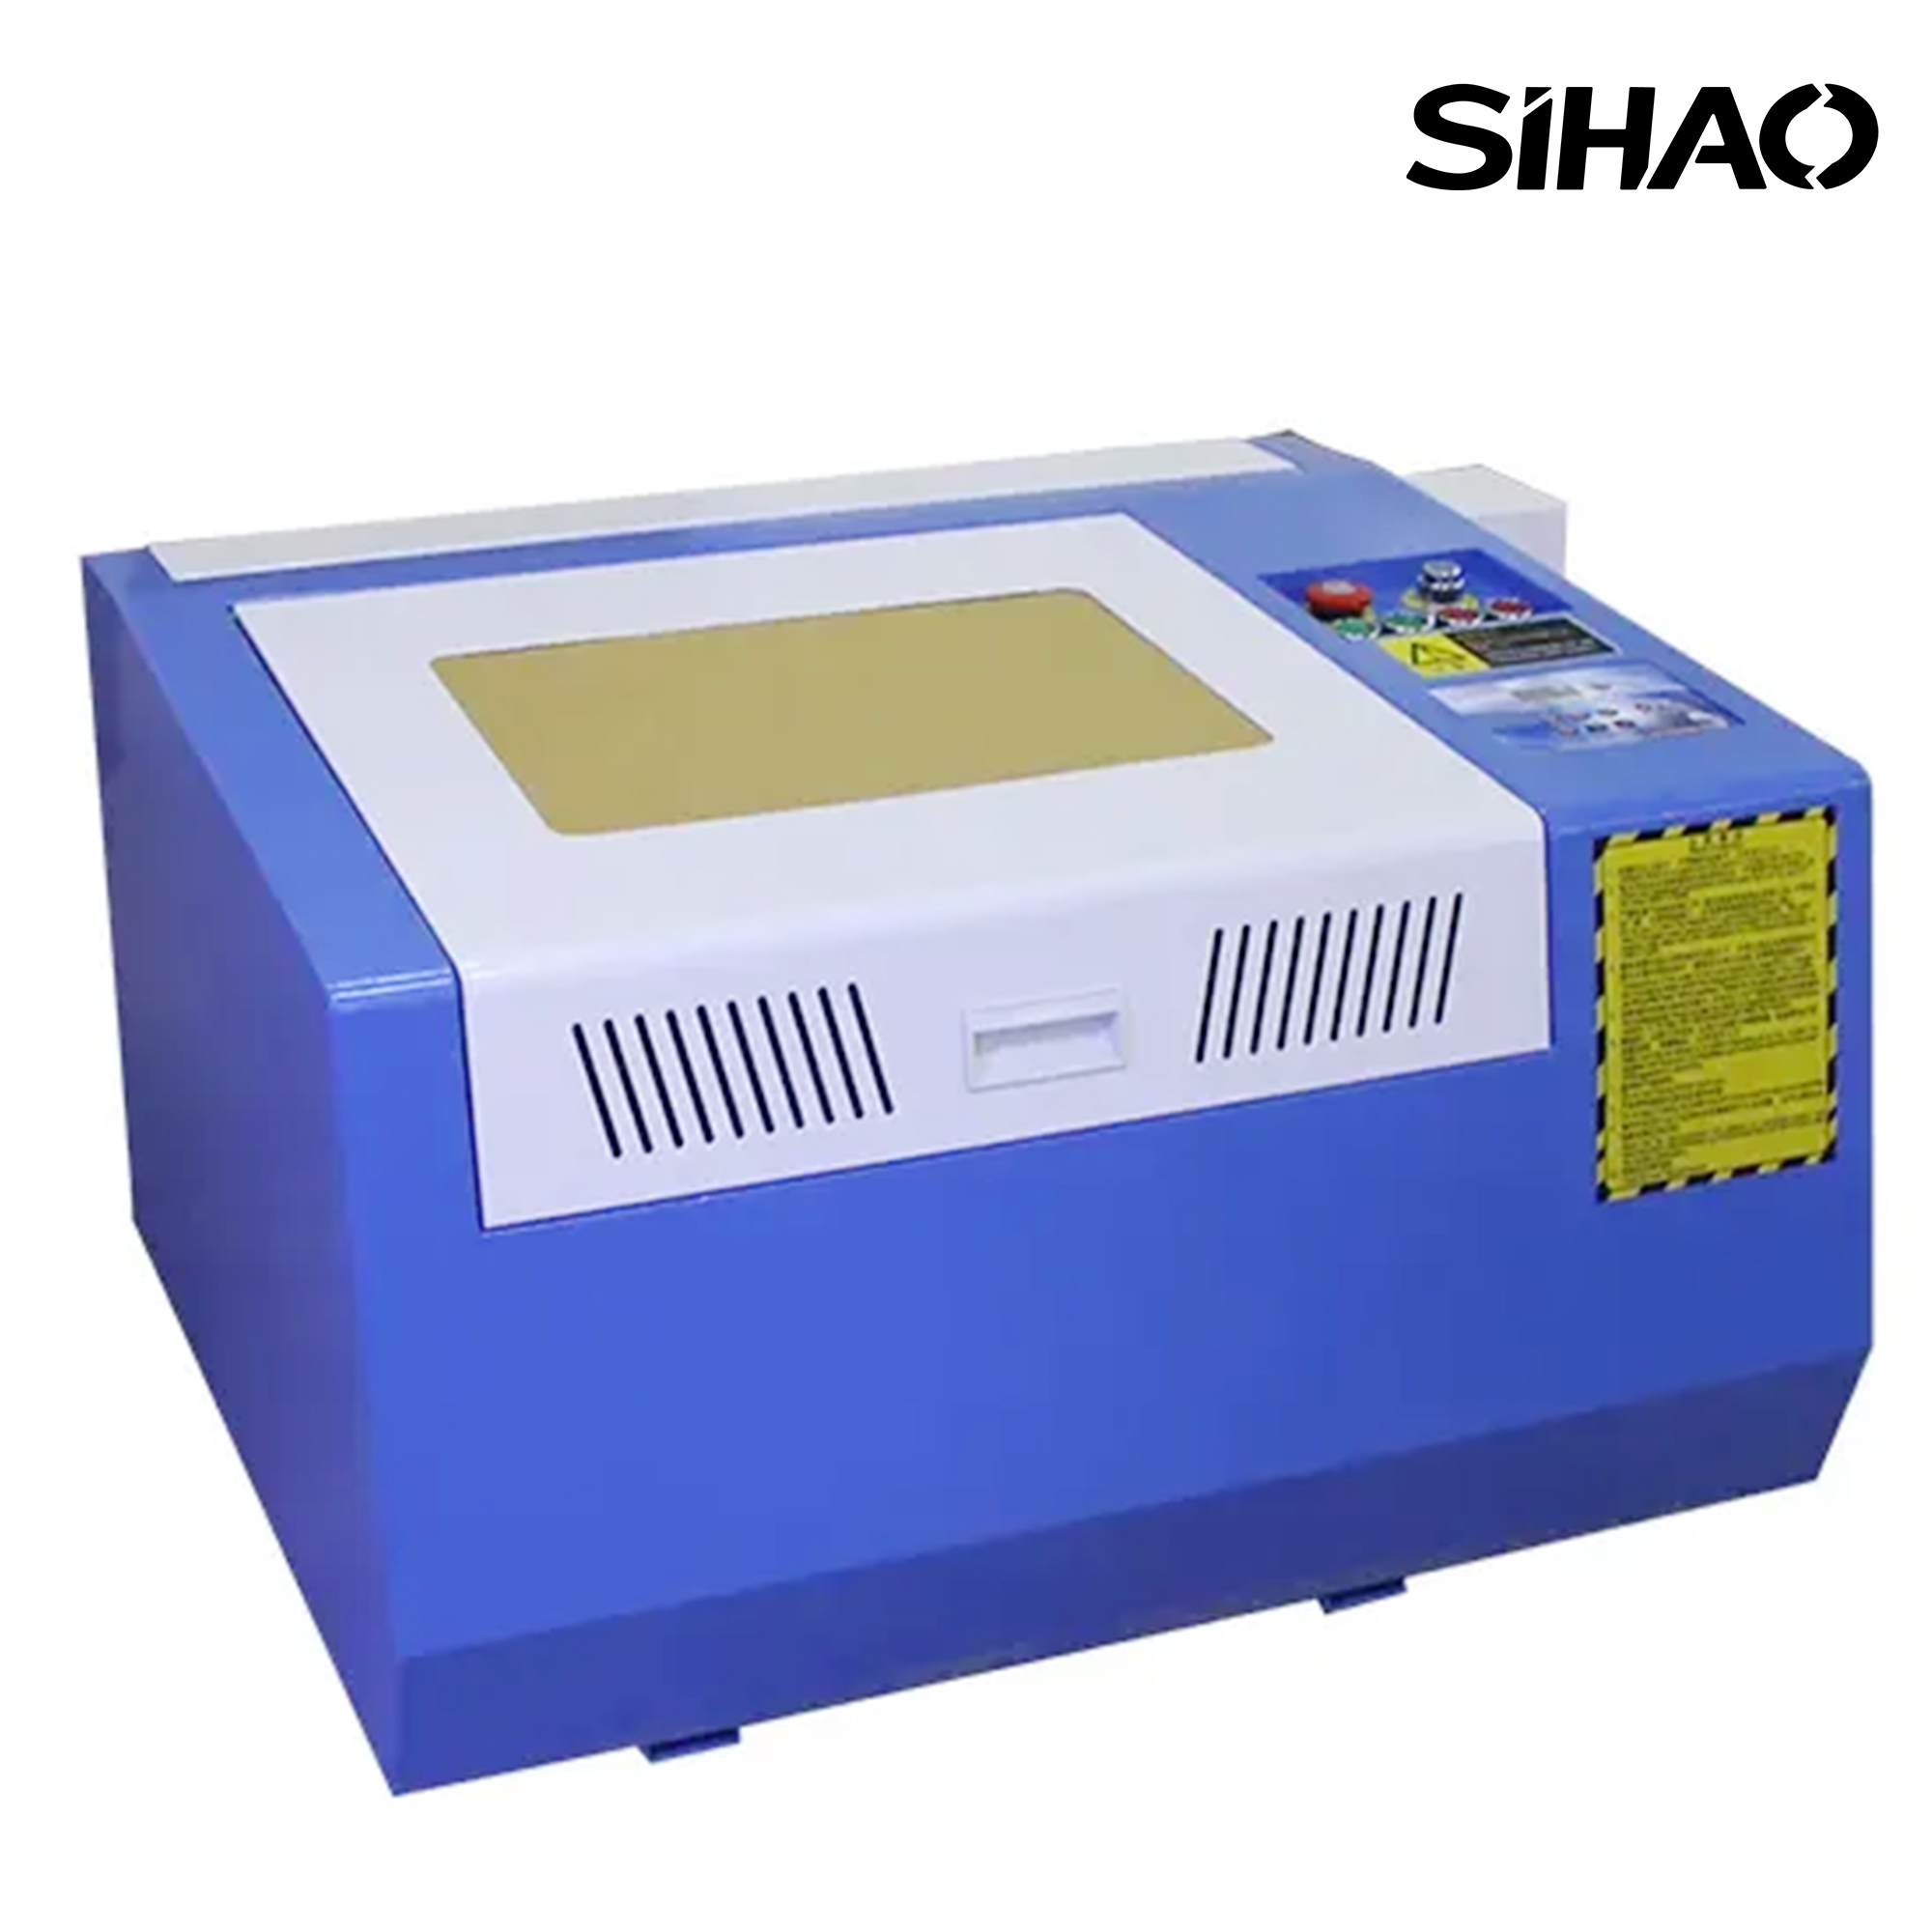 SIHAO 300X400MM Laser Engraving Machine